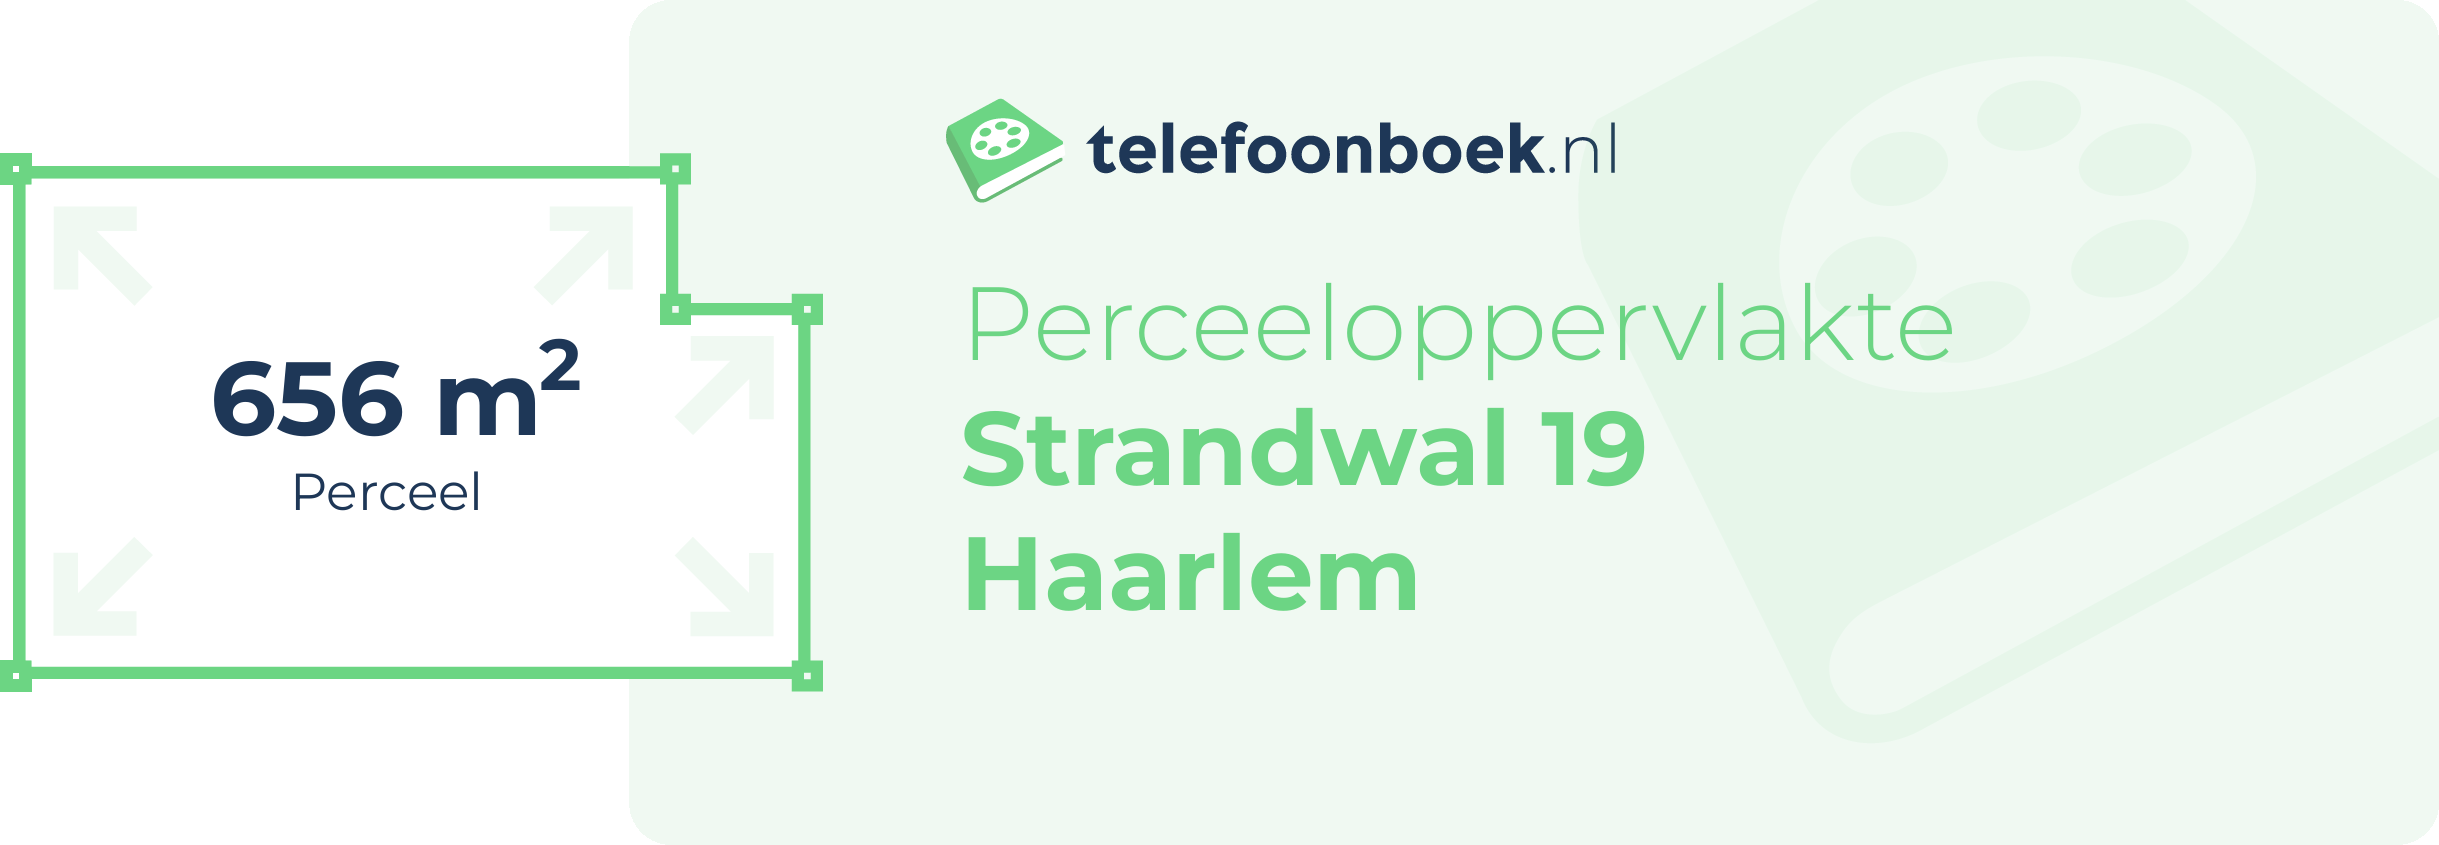 Perceeloppervlakte Strandwal 19 Haarlem